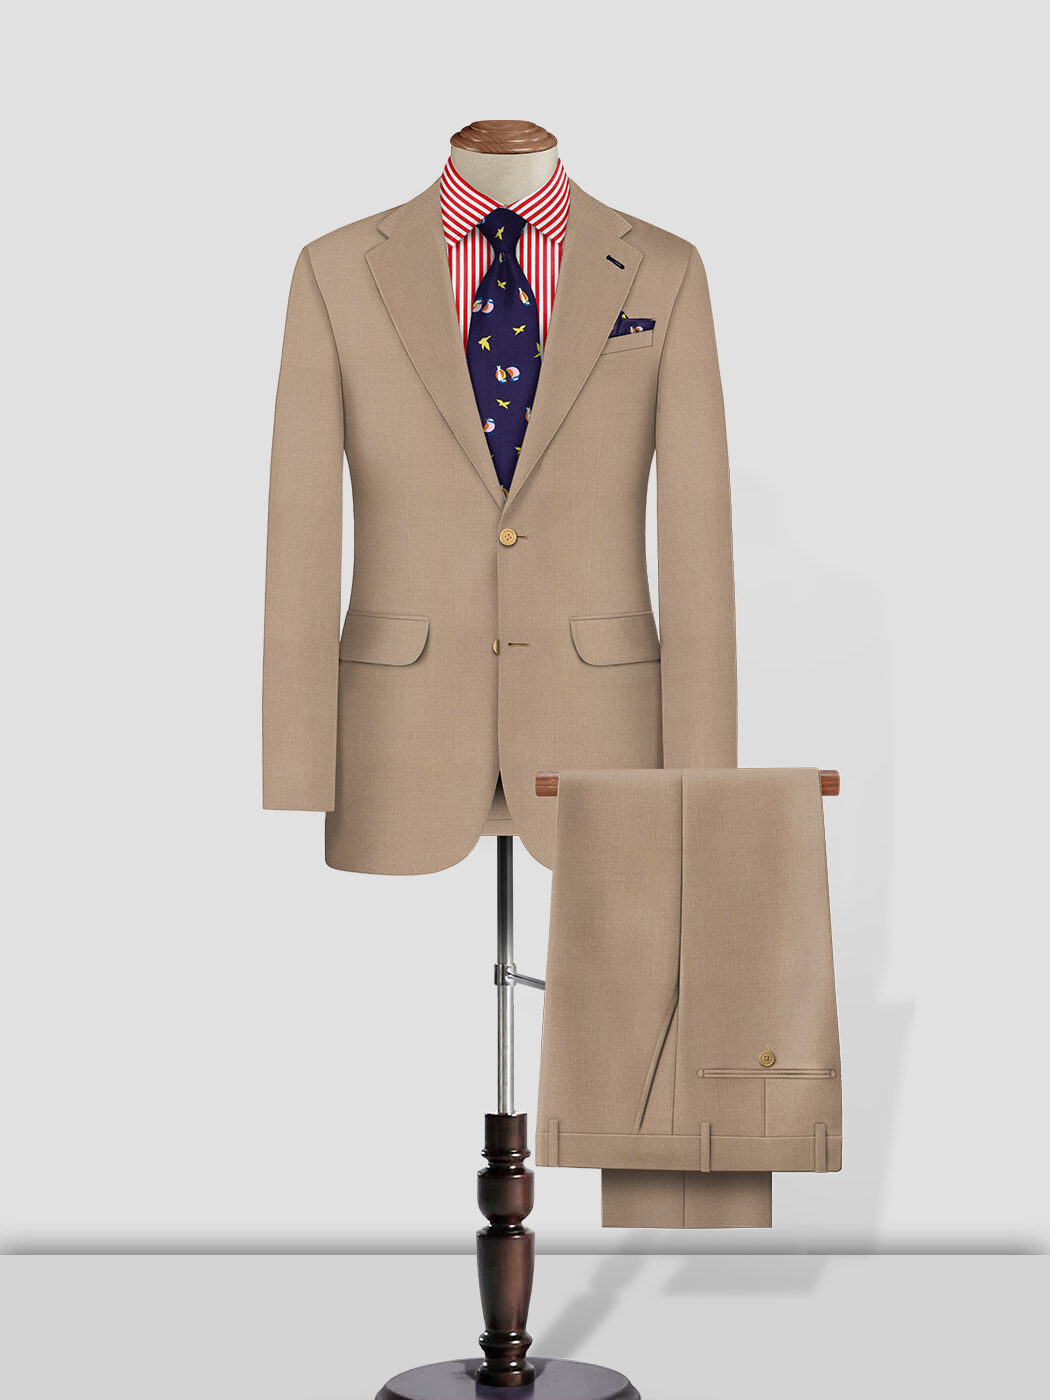 Release Men Suits Slim Fit Tuxedo Prom 3 Piece Wedding Suit for Groom  Burgundy Black Suit (Color : A, Size : 5XLcode) : Amazon.co.uk: Fashion